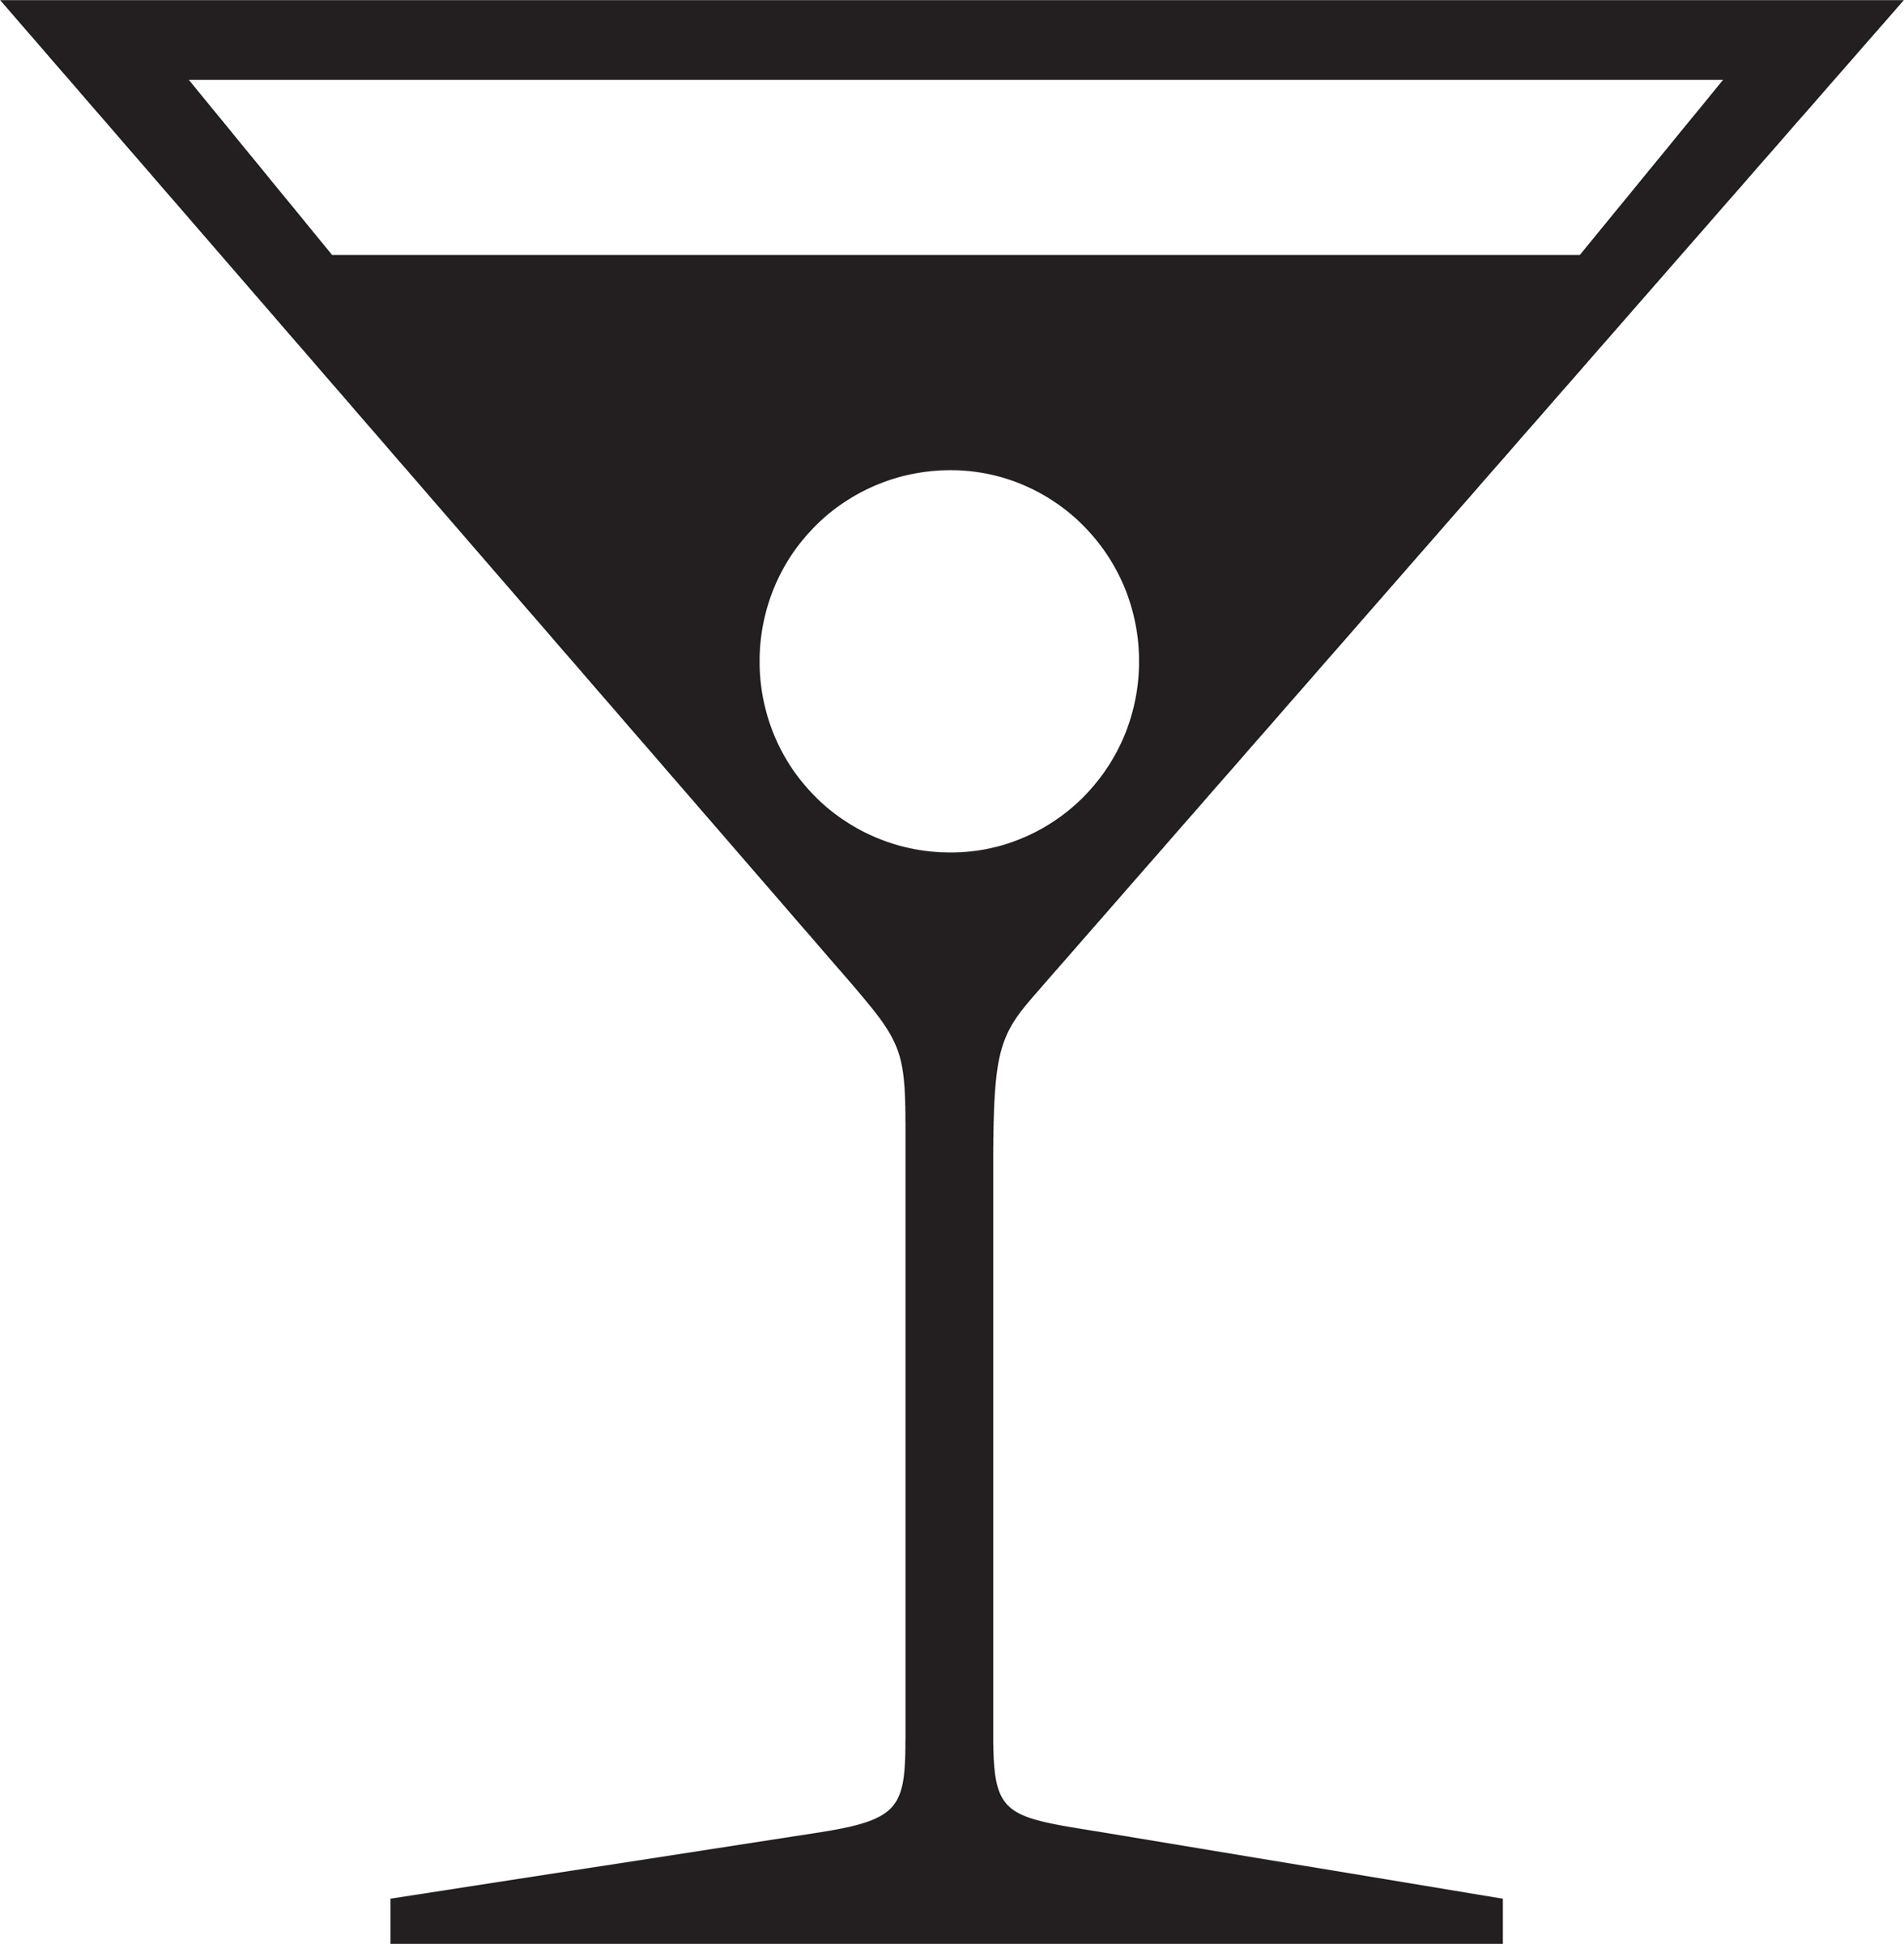 Martini glass margarita cocktail glass clipart